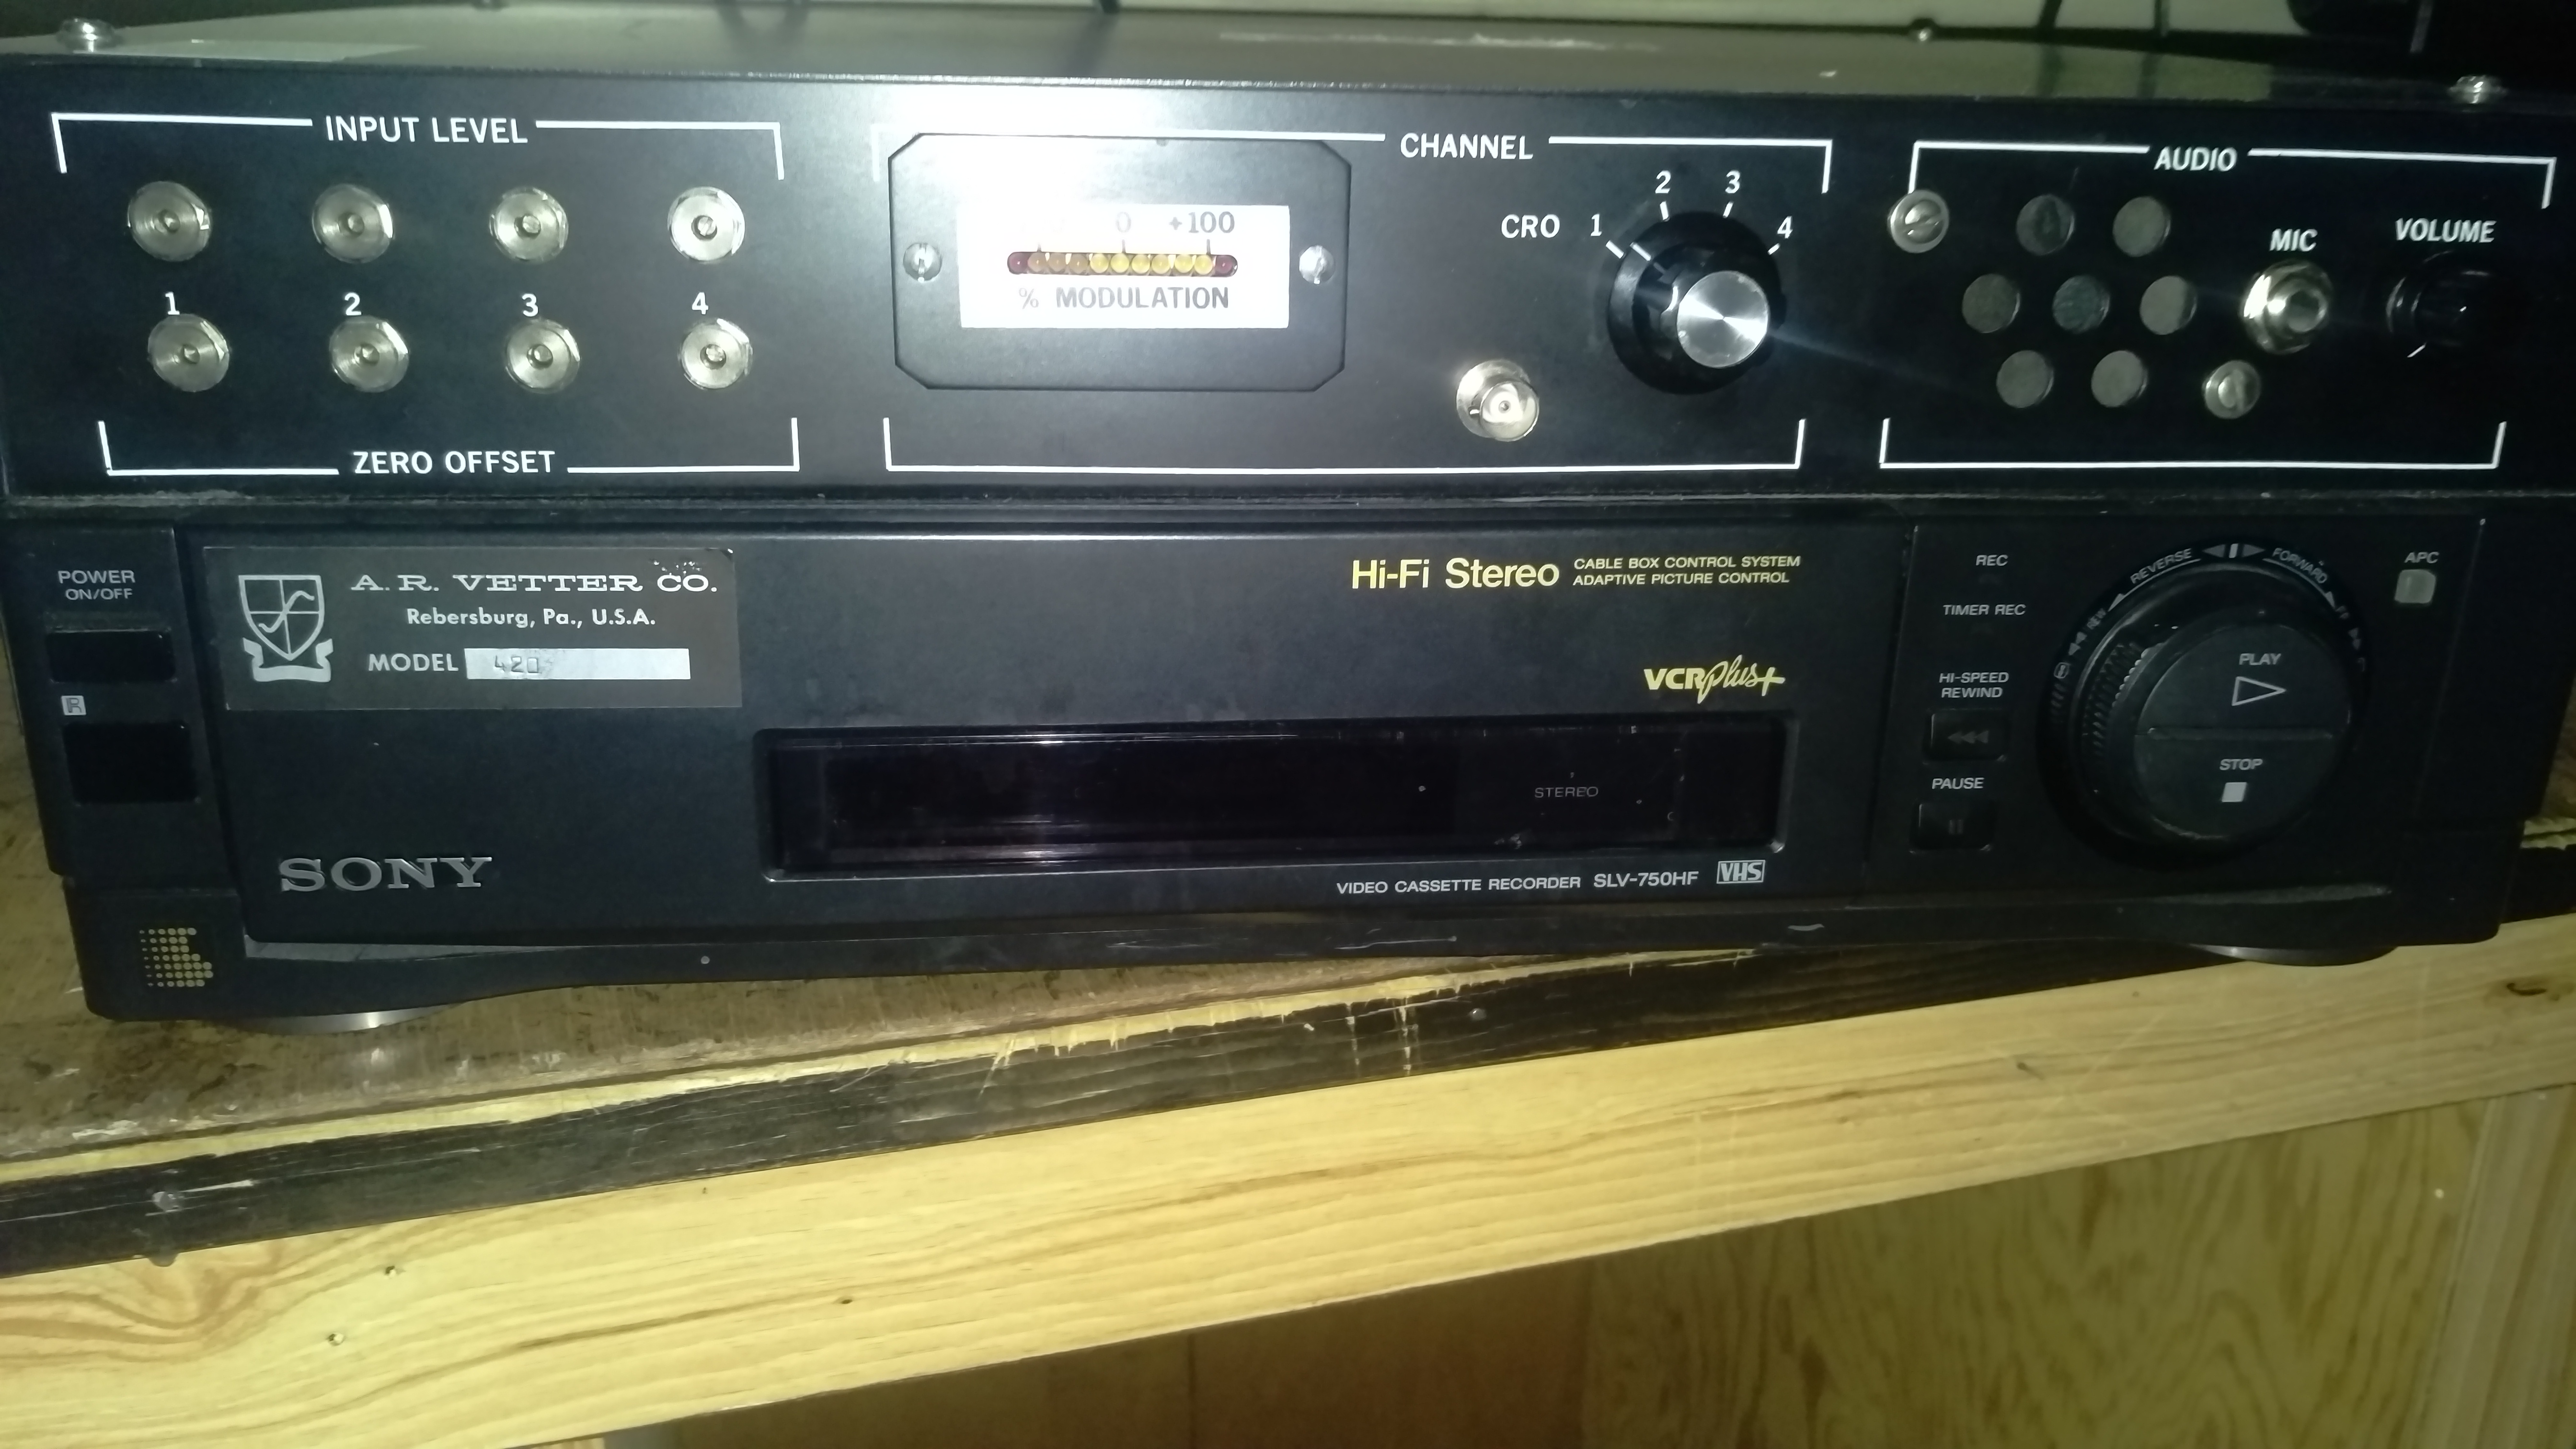 AR VETTER Co 420 VCR Medical Data Instrumentation Recorder VHS m